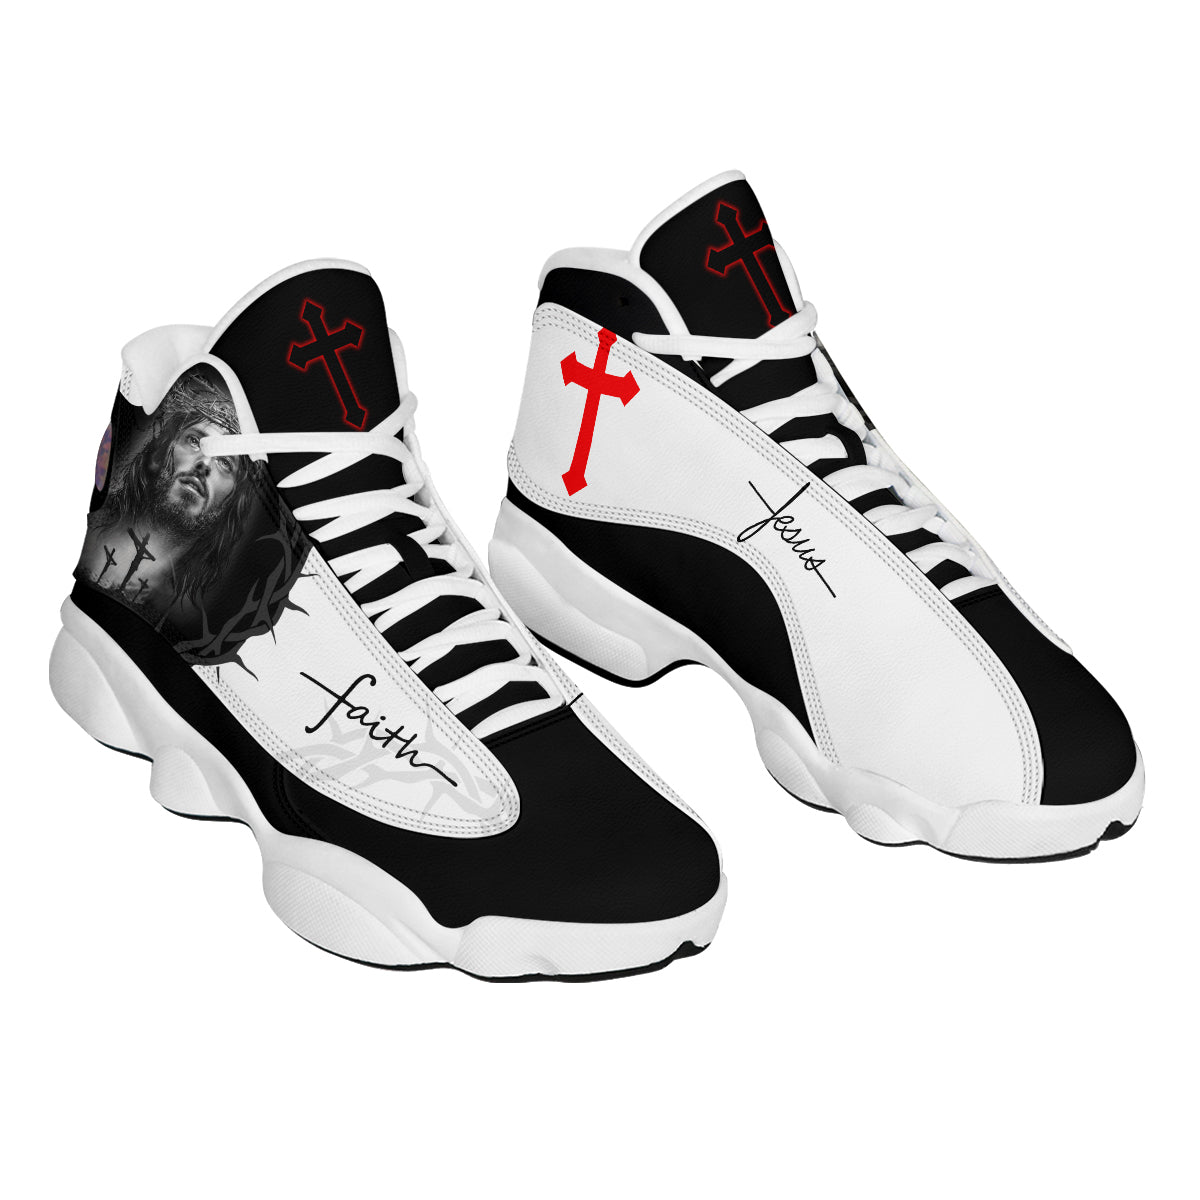 Jesus Portrait Art And Faith Basketball Shoes For Men Women - Christian Shoes - Jesus Shoes - Unisex Basketball Shoes